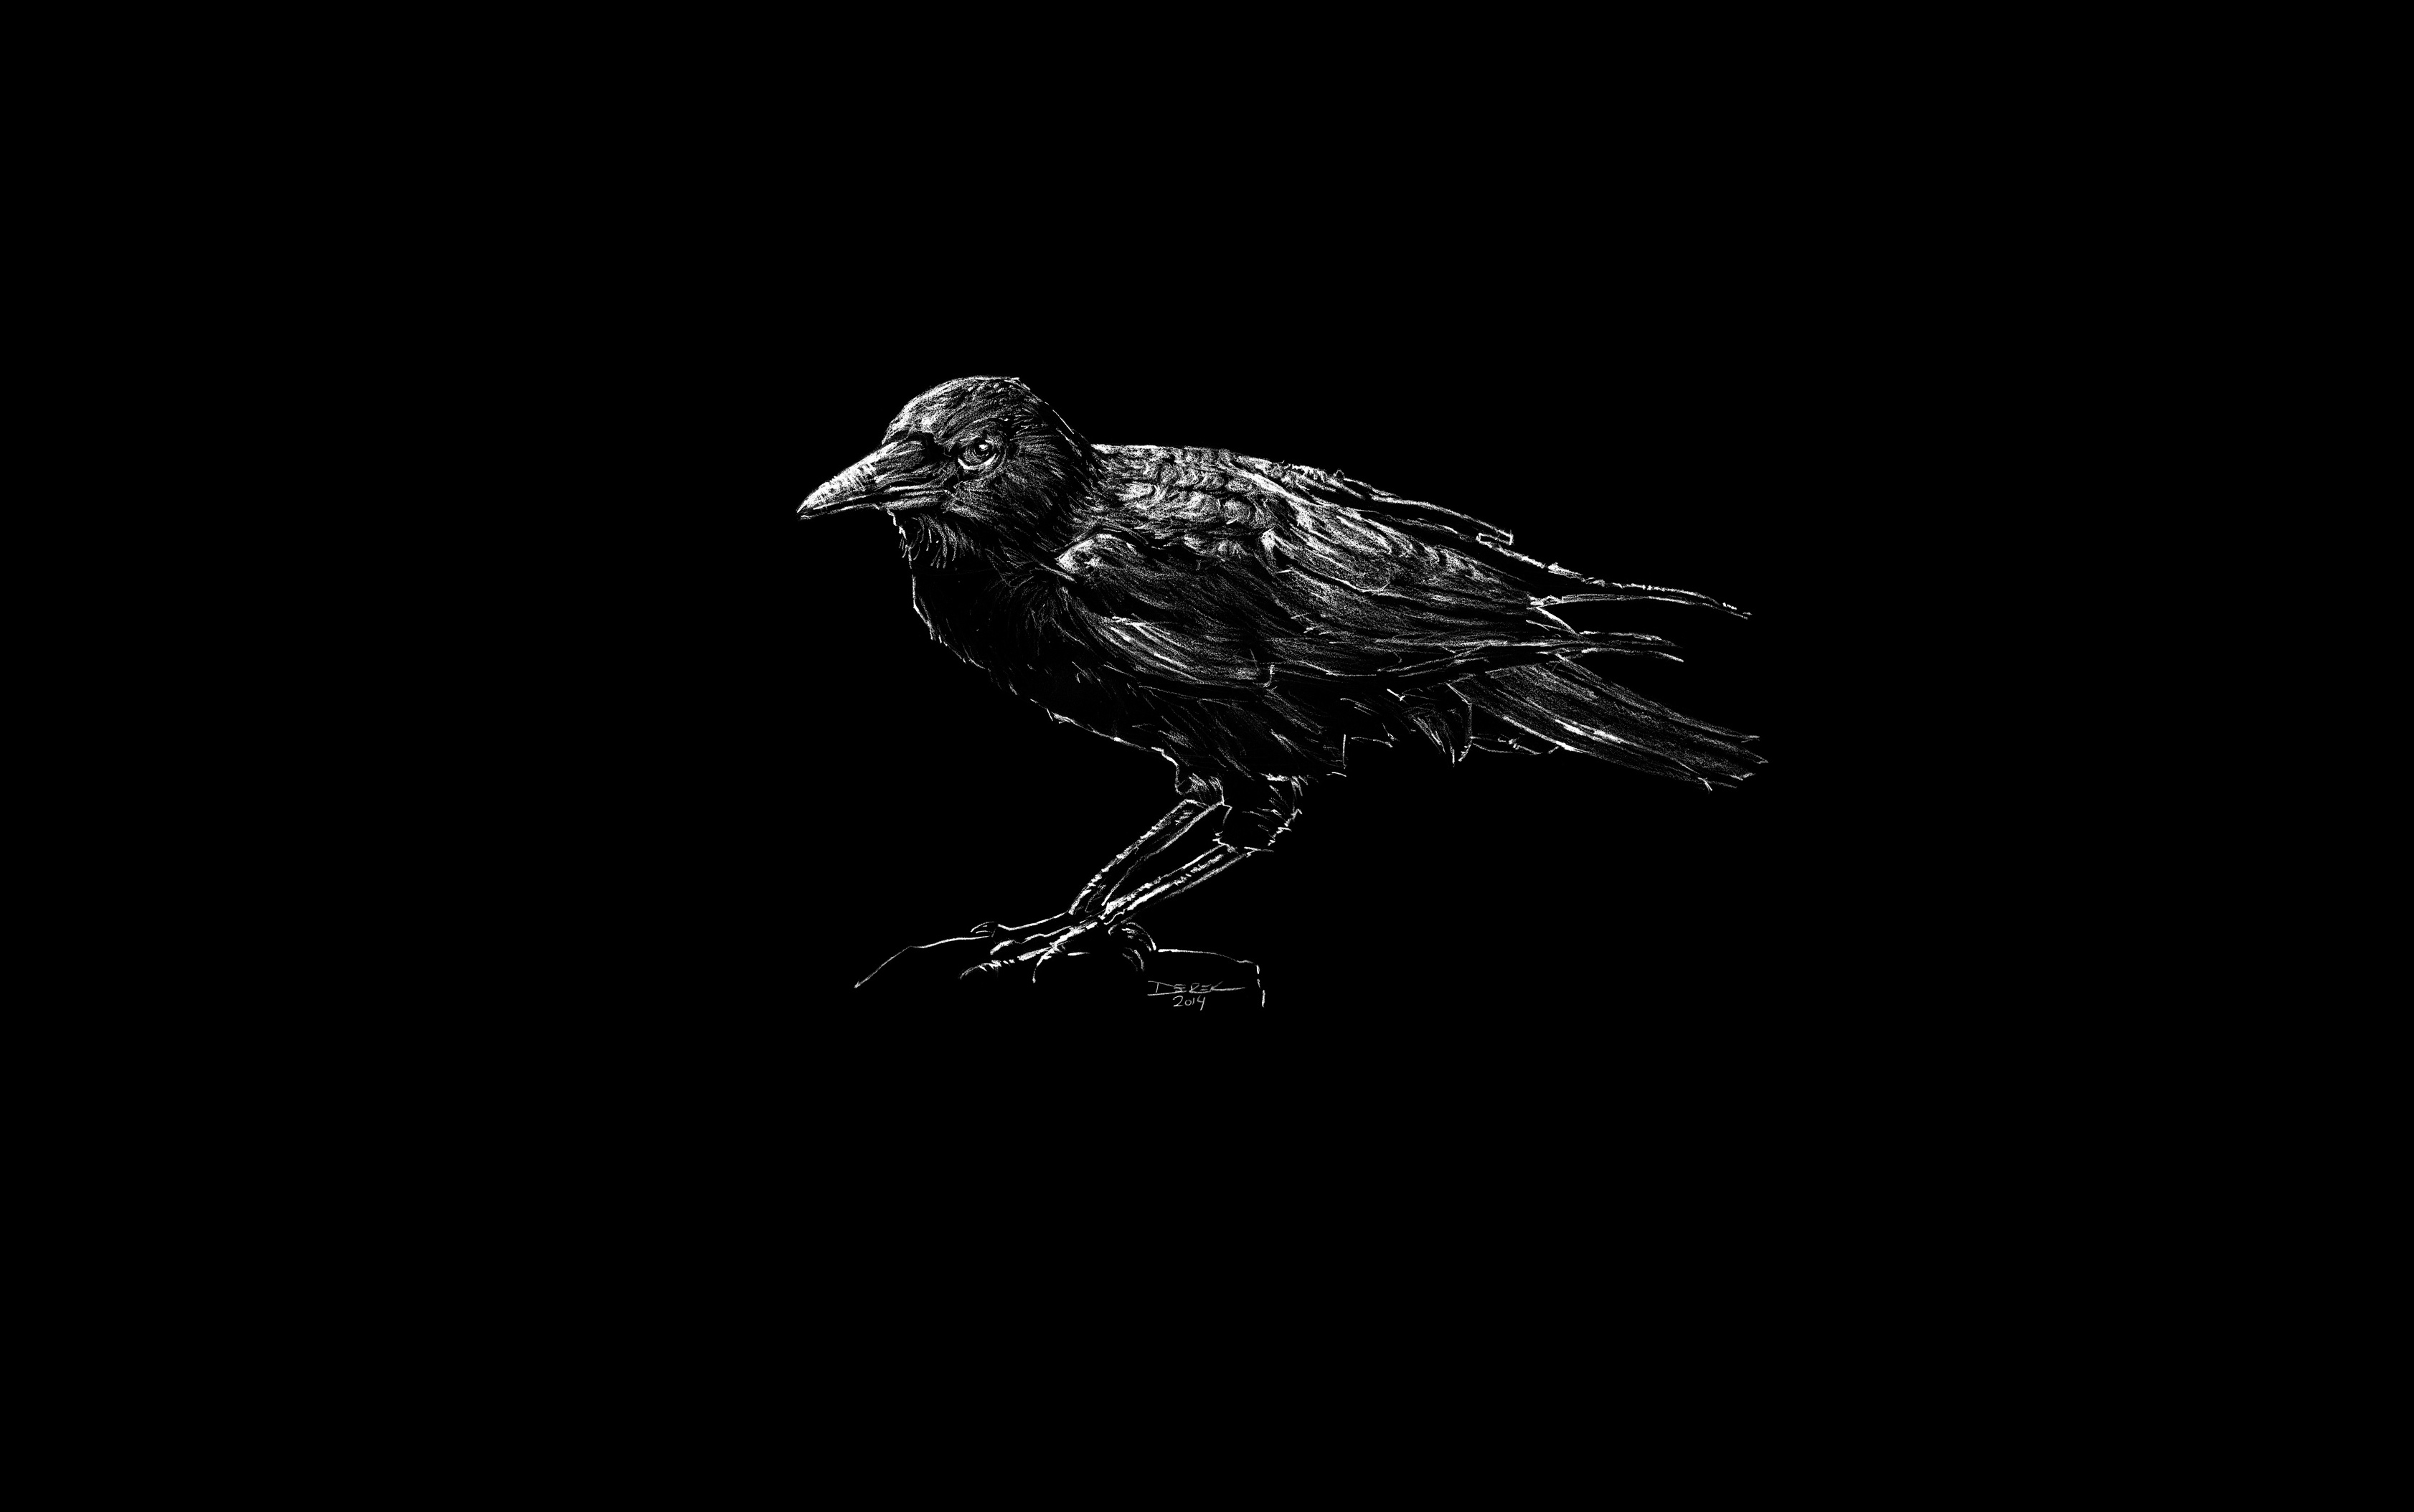 Artistic Bird Black Crow 3365x2108